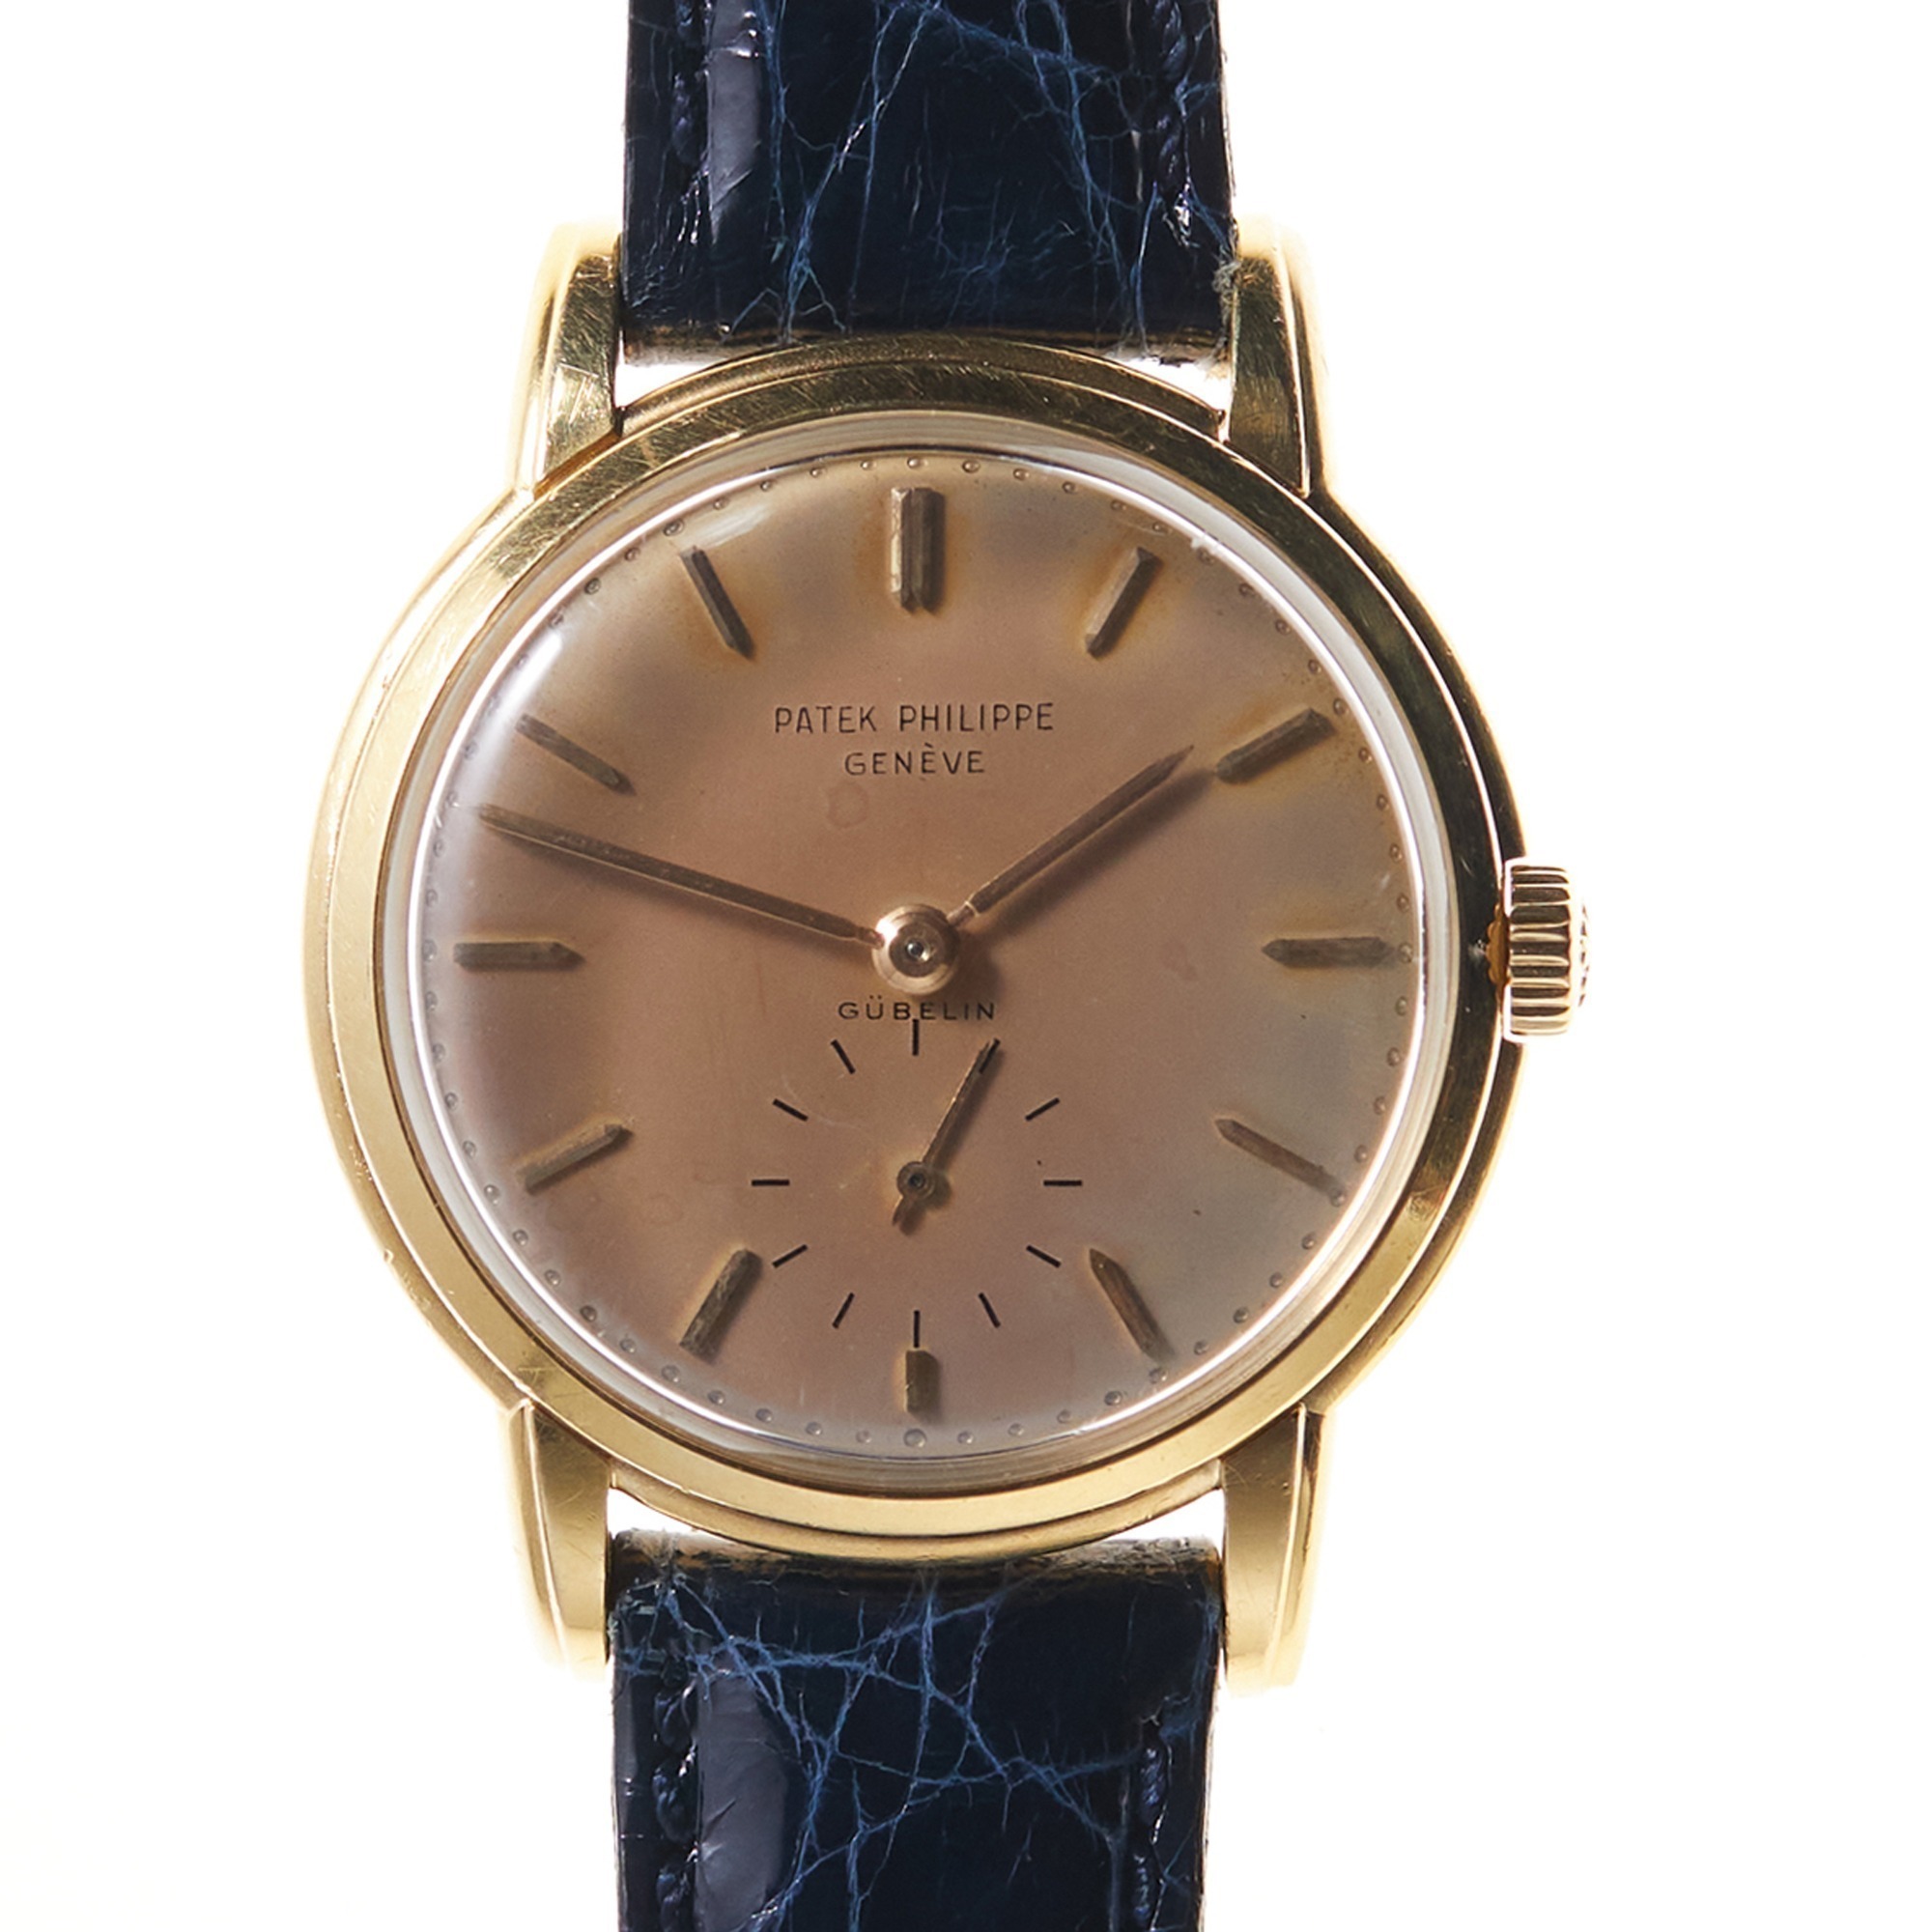 Patek Philippe for Gubelin 18K Yellow Gold Calatrava Ref. 2484 Tropical Dial Wristwatch